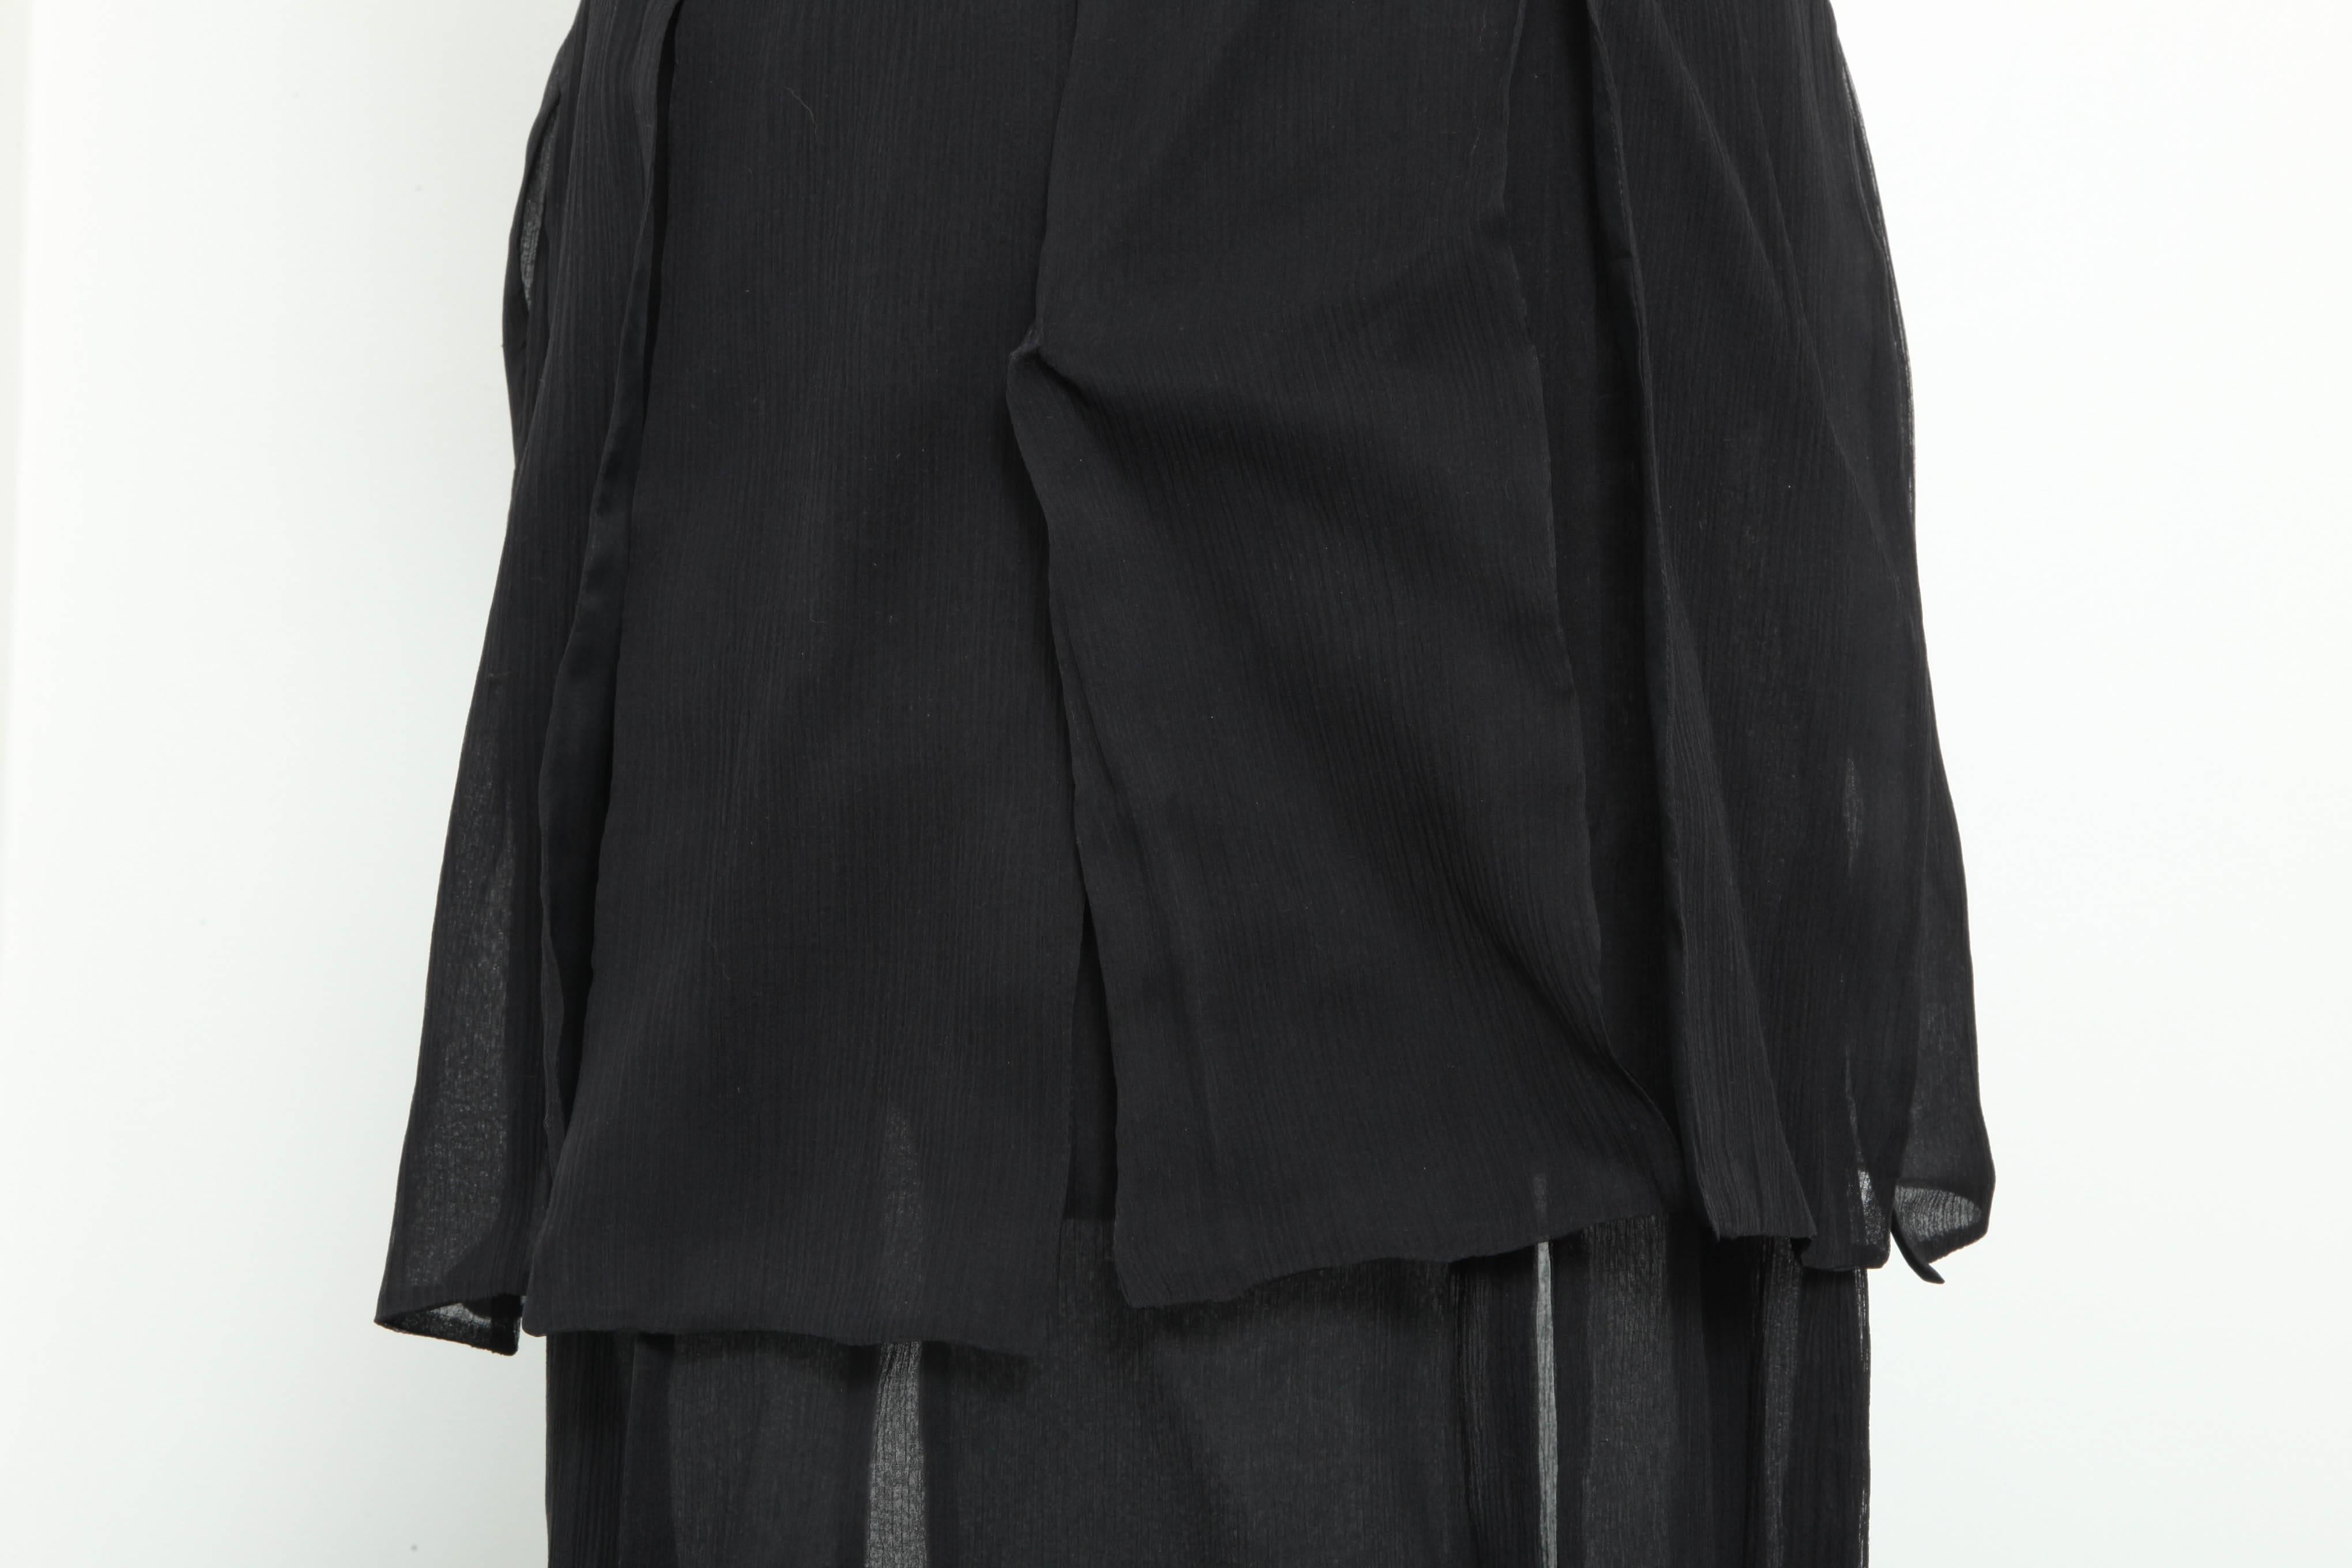 Rodarte Black See-Through Chiffon Gown Dress For Sale 1